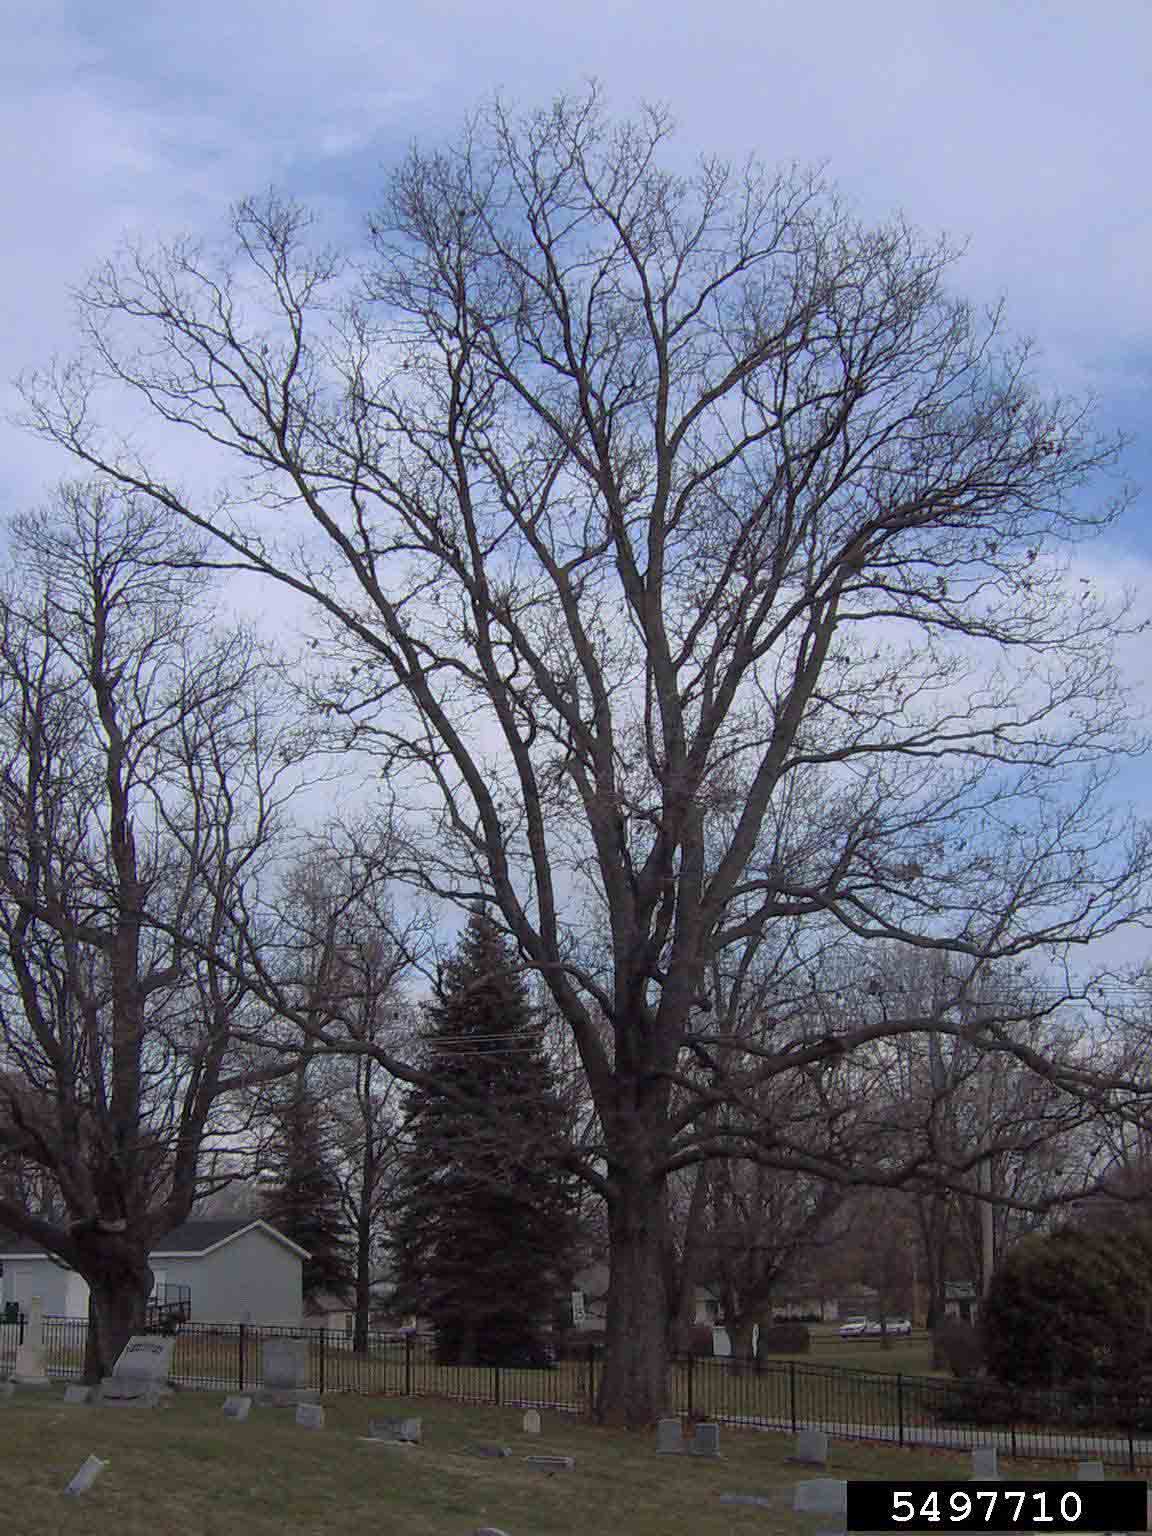 Pignut hickory tree habit, winter